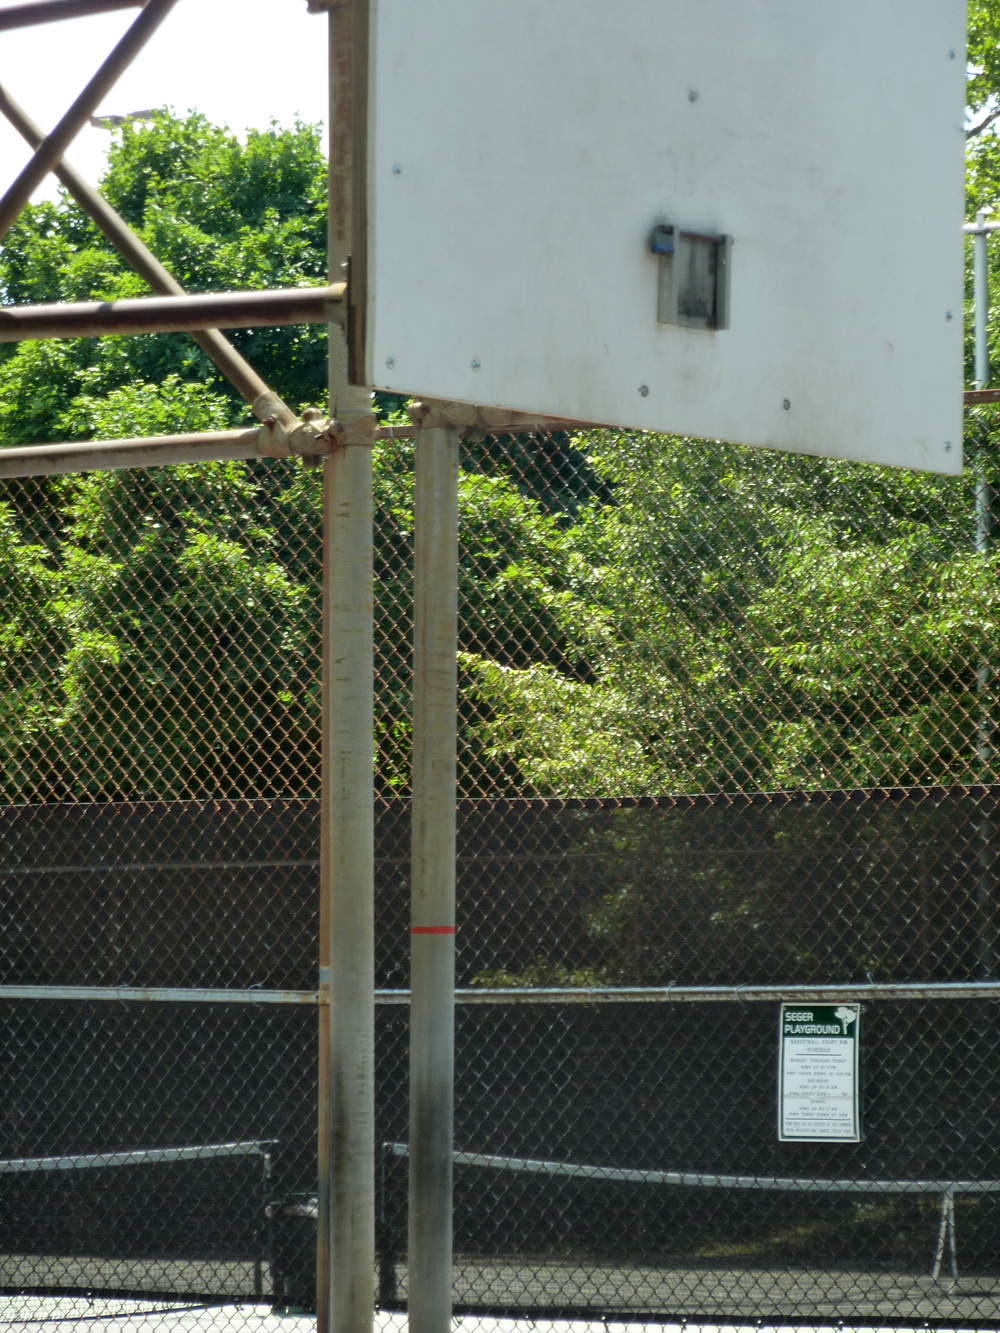 A basketball backboard lacks a rim in a Philadelphia park.